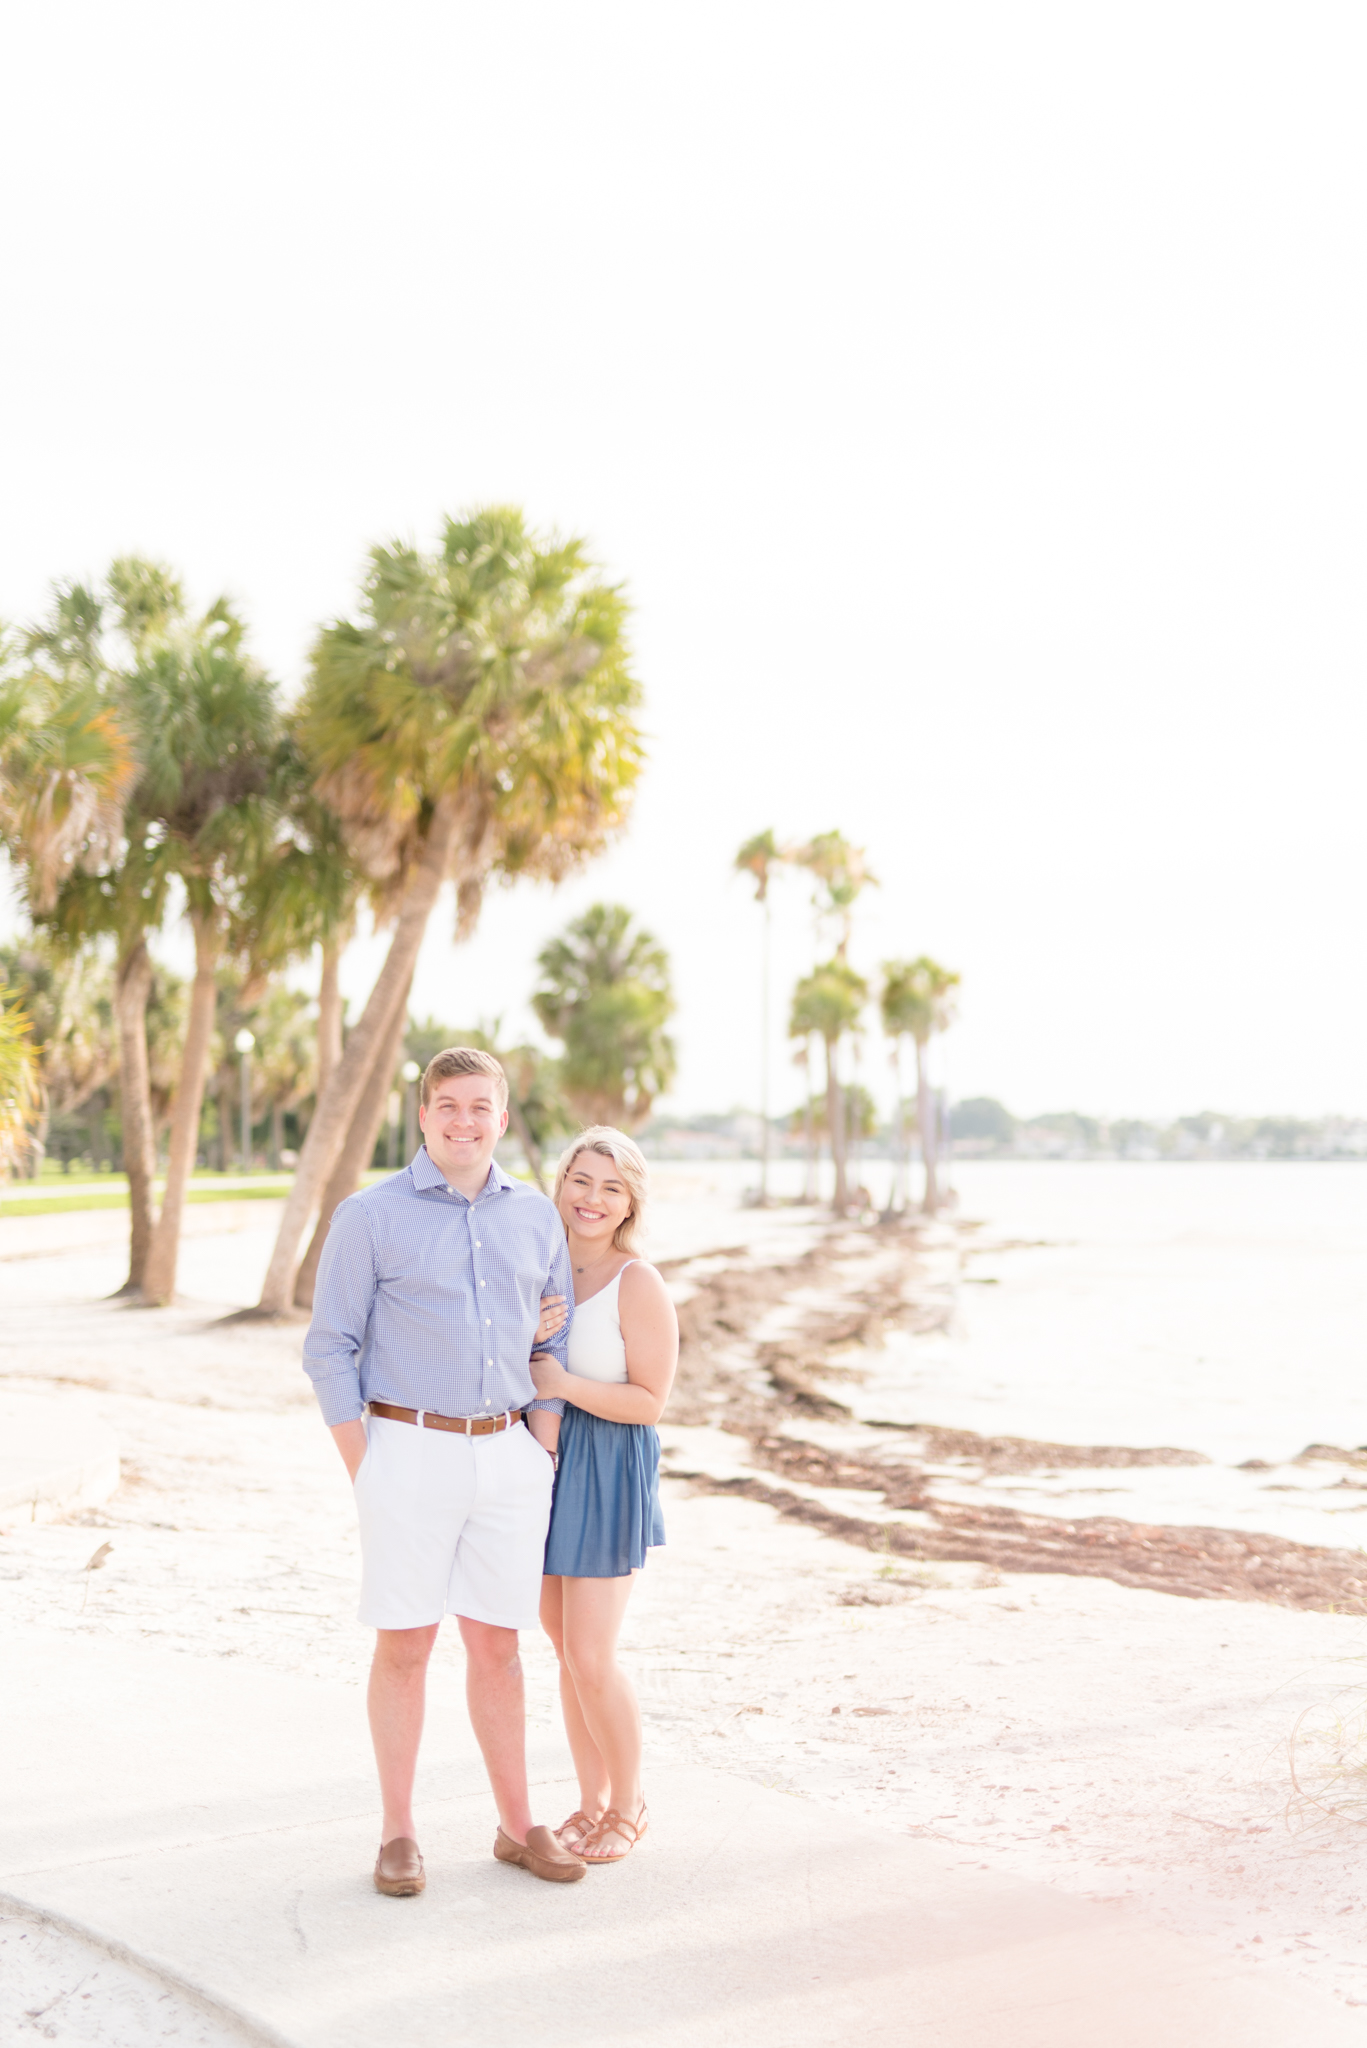 Couple smiles at camera on Florida beach.